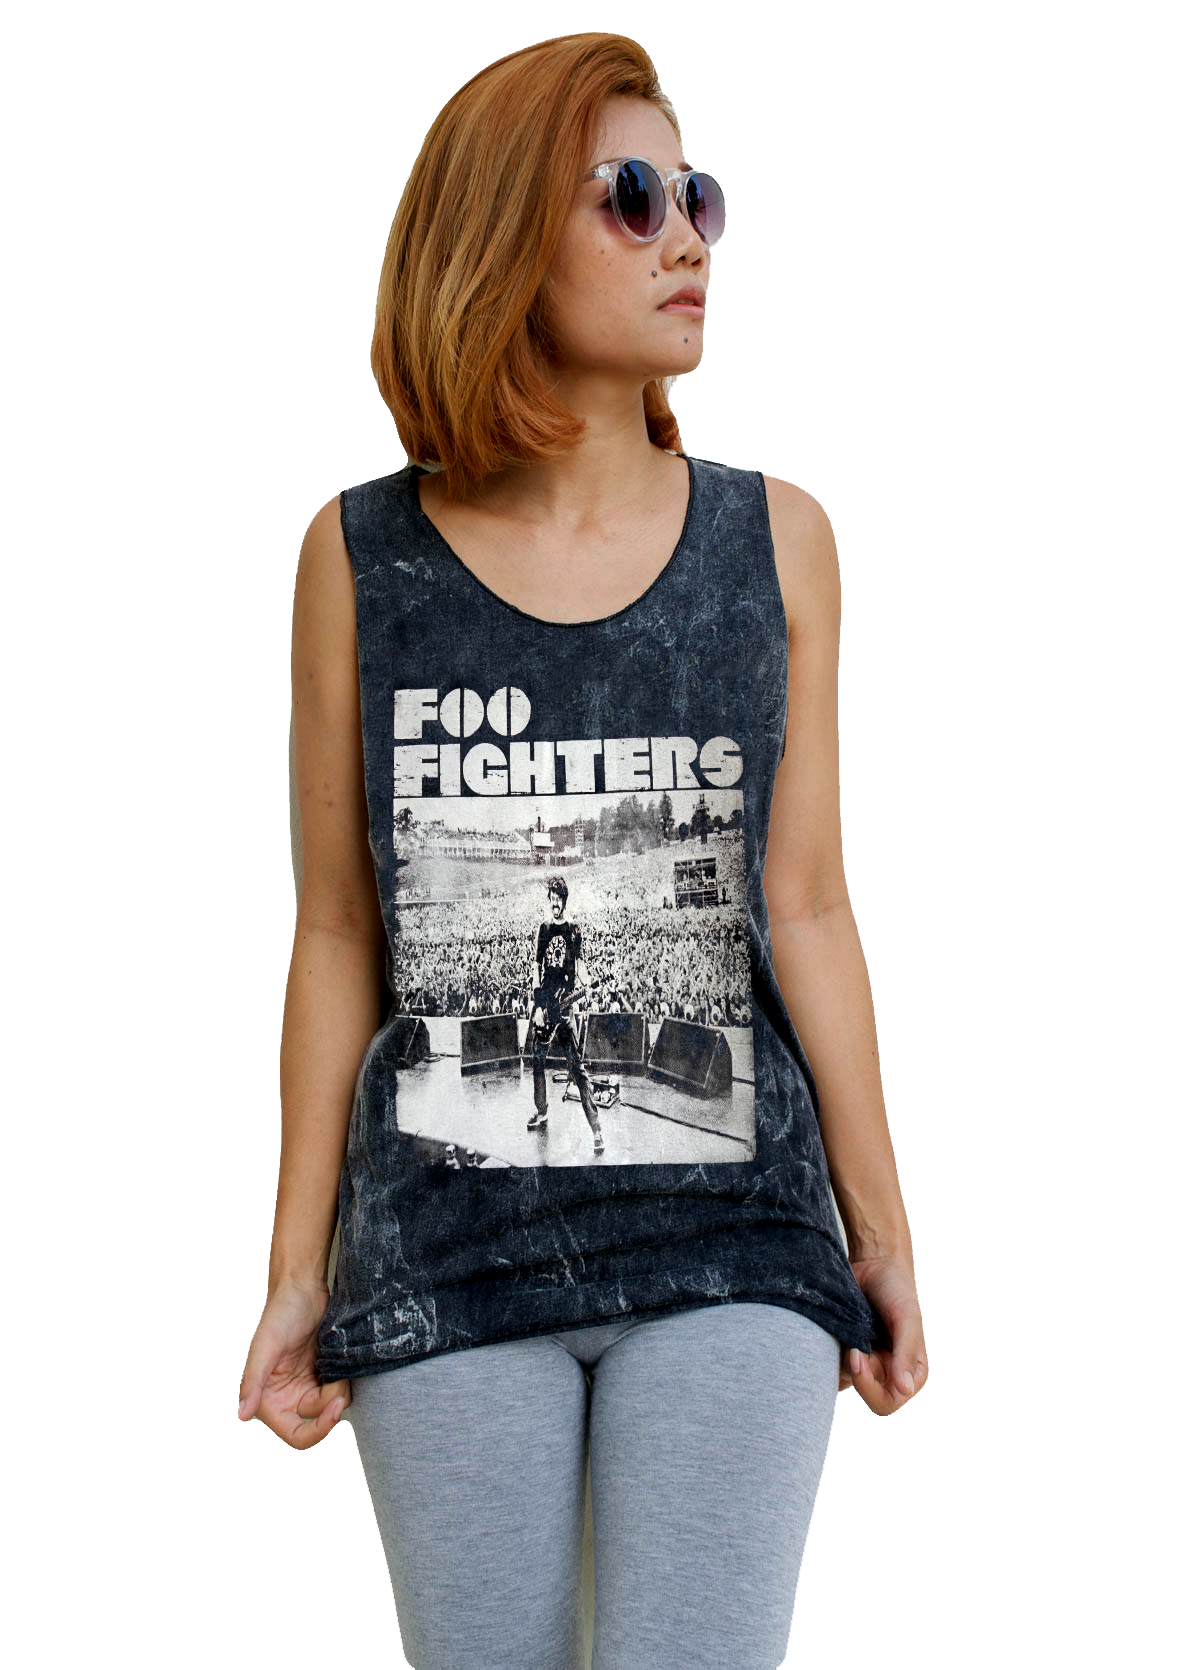 Unisex Foo Fighters Tank-Top Singlet vest Sleeveless T-shirt